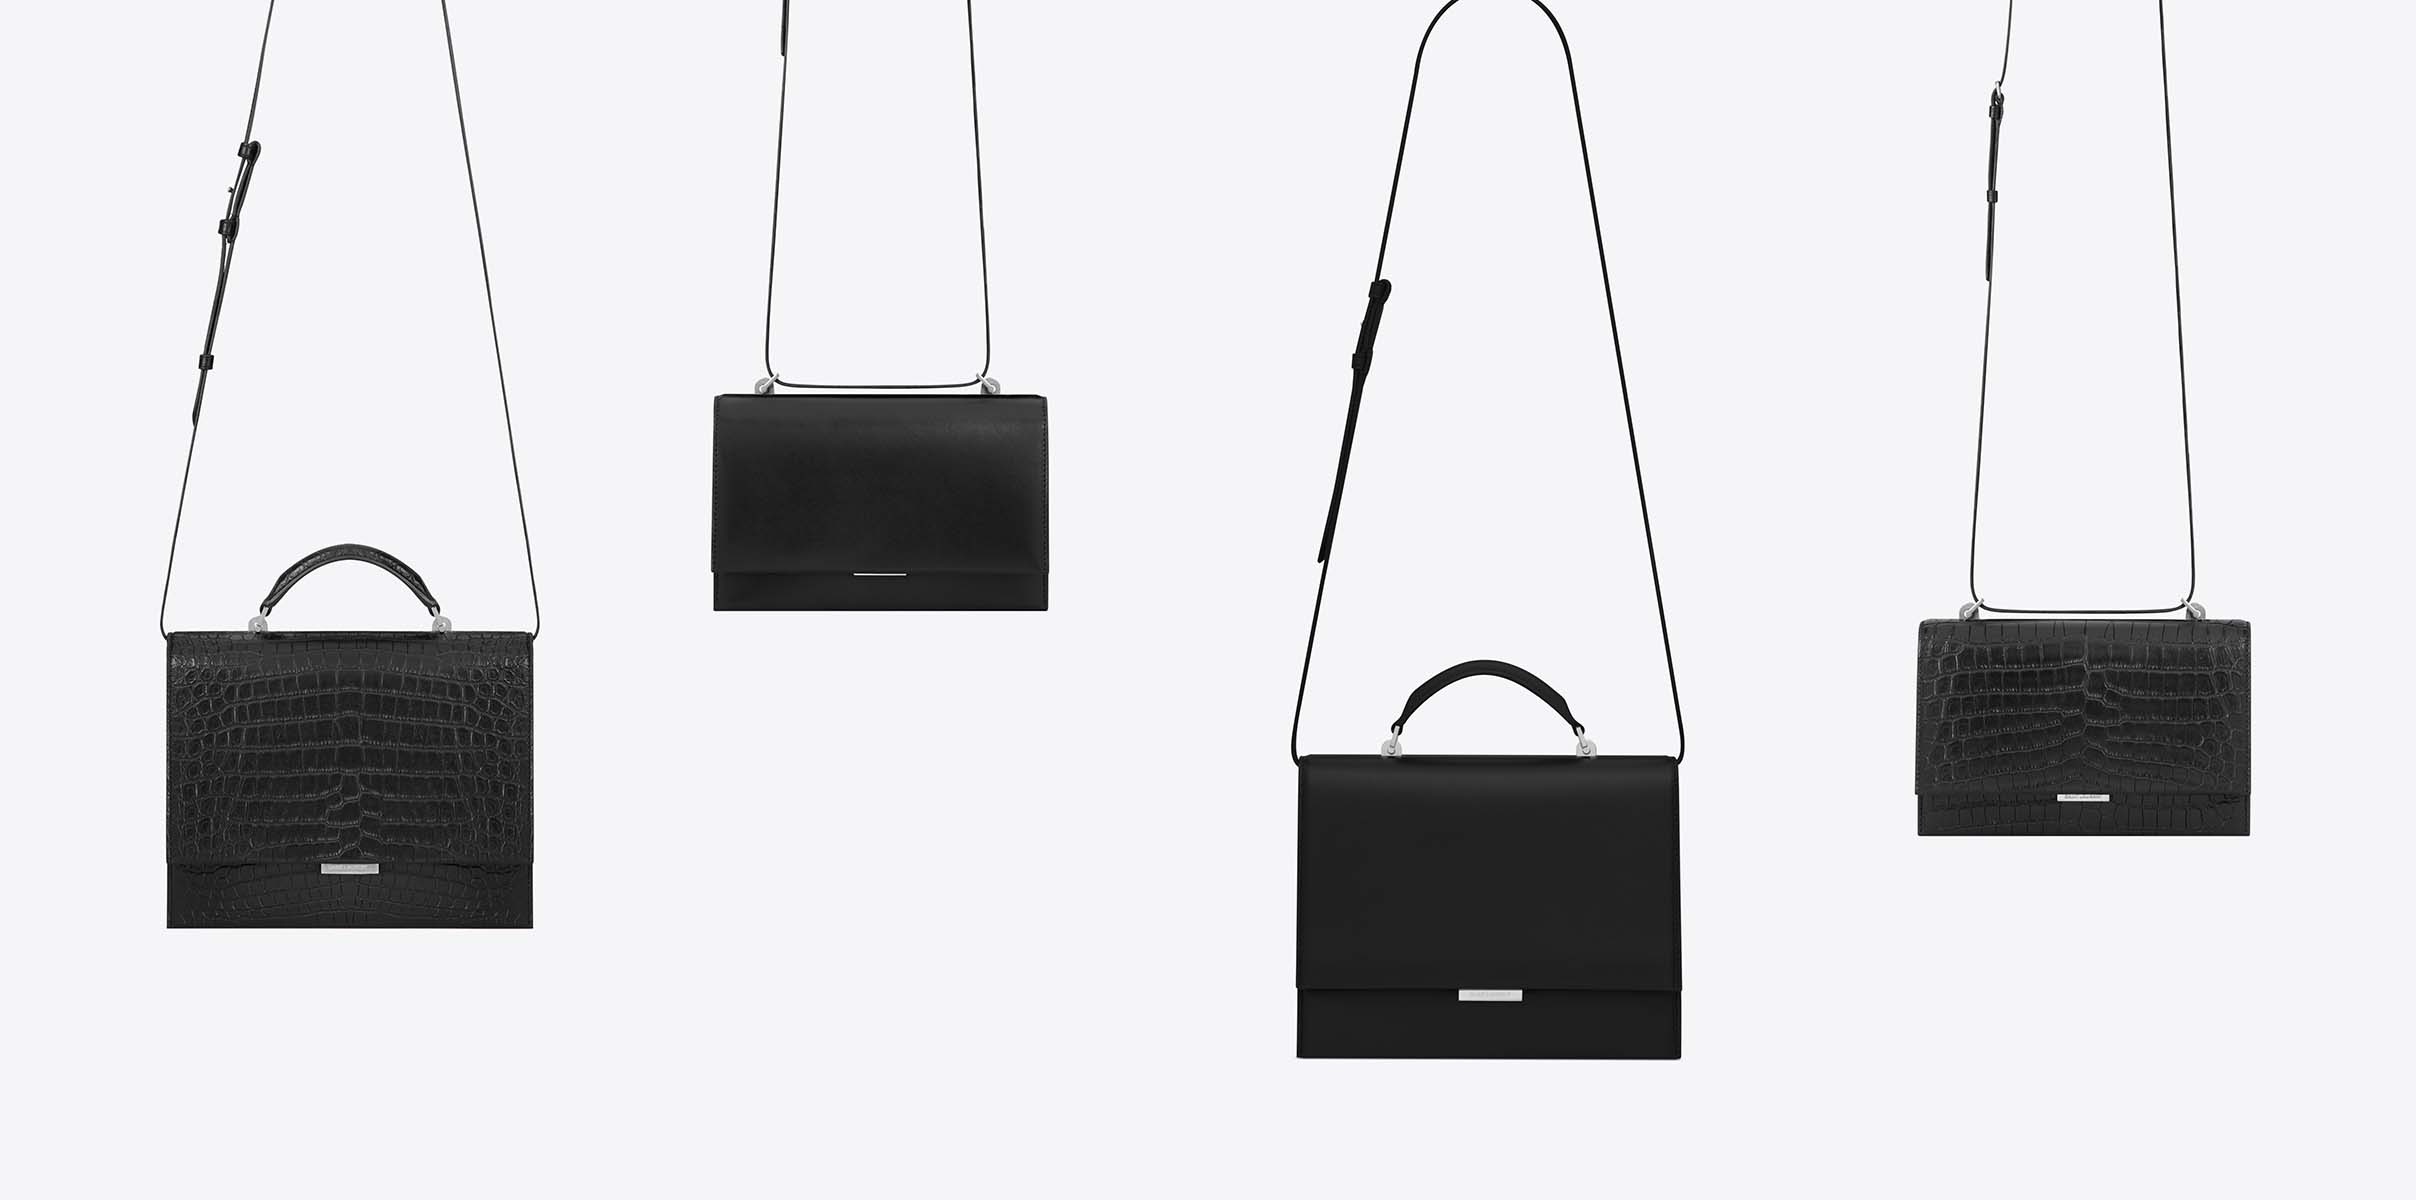 Saint Laurent - Authenticated Babylone Handbag - Leather Black Plain for Women, Never Worn